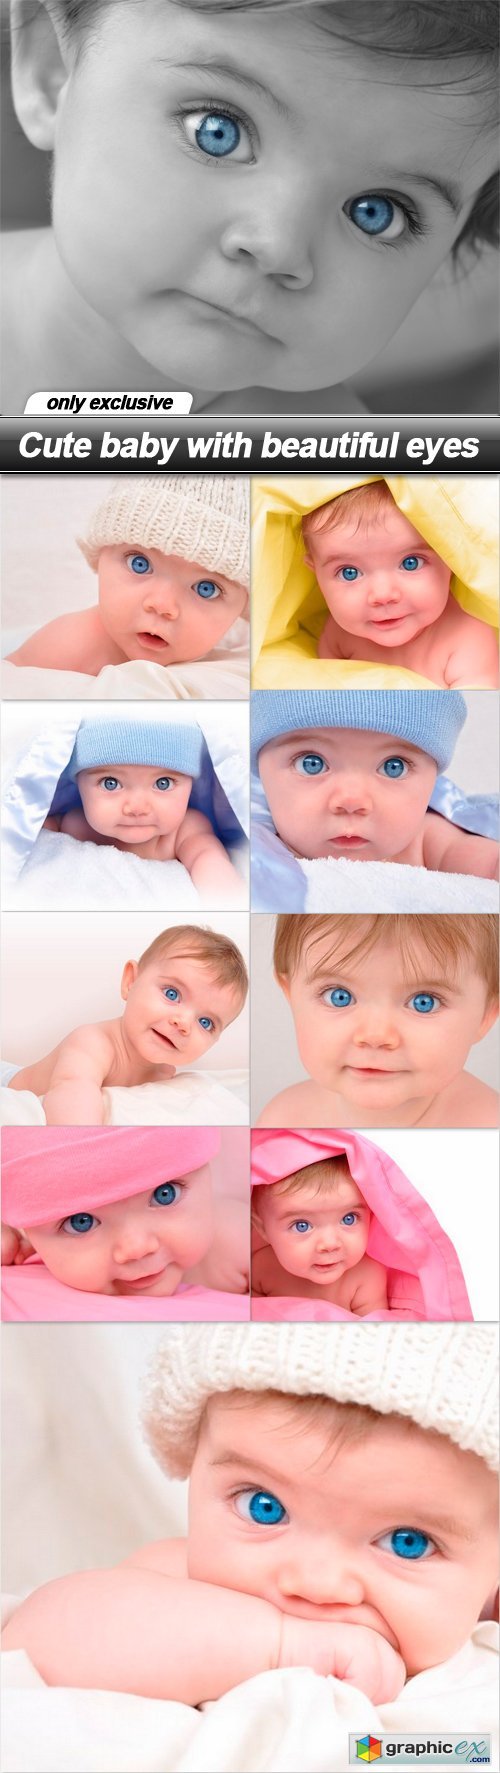 Cute baby with beautiful eyes - 10 UHQ JPEG